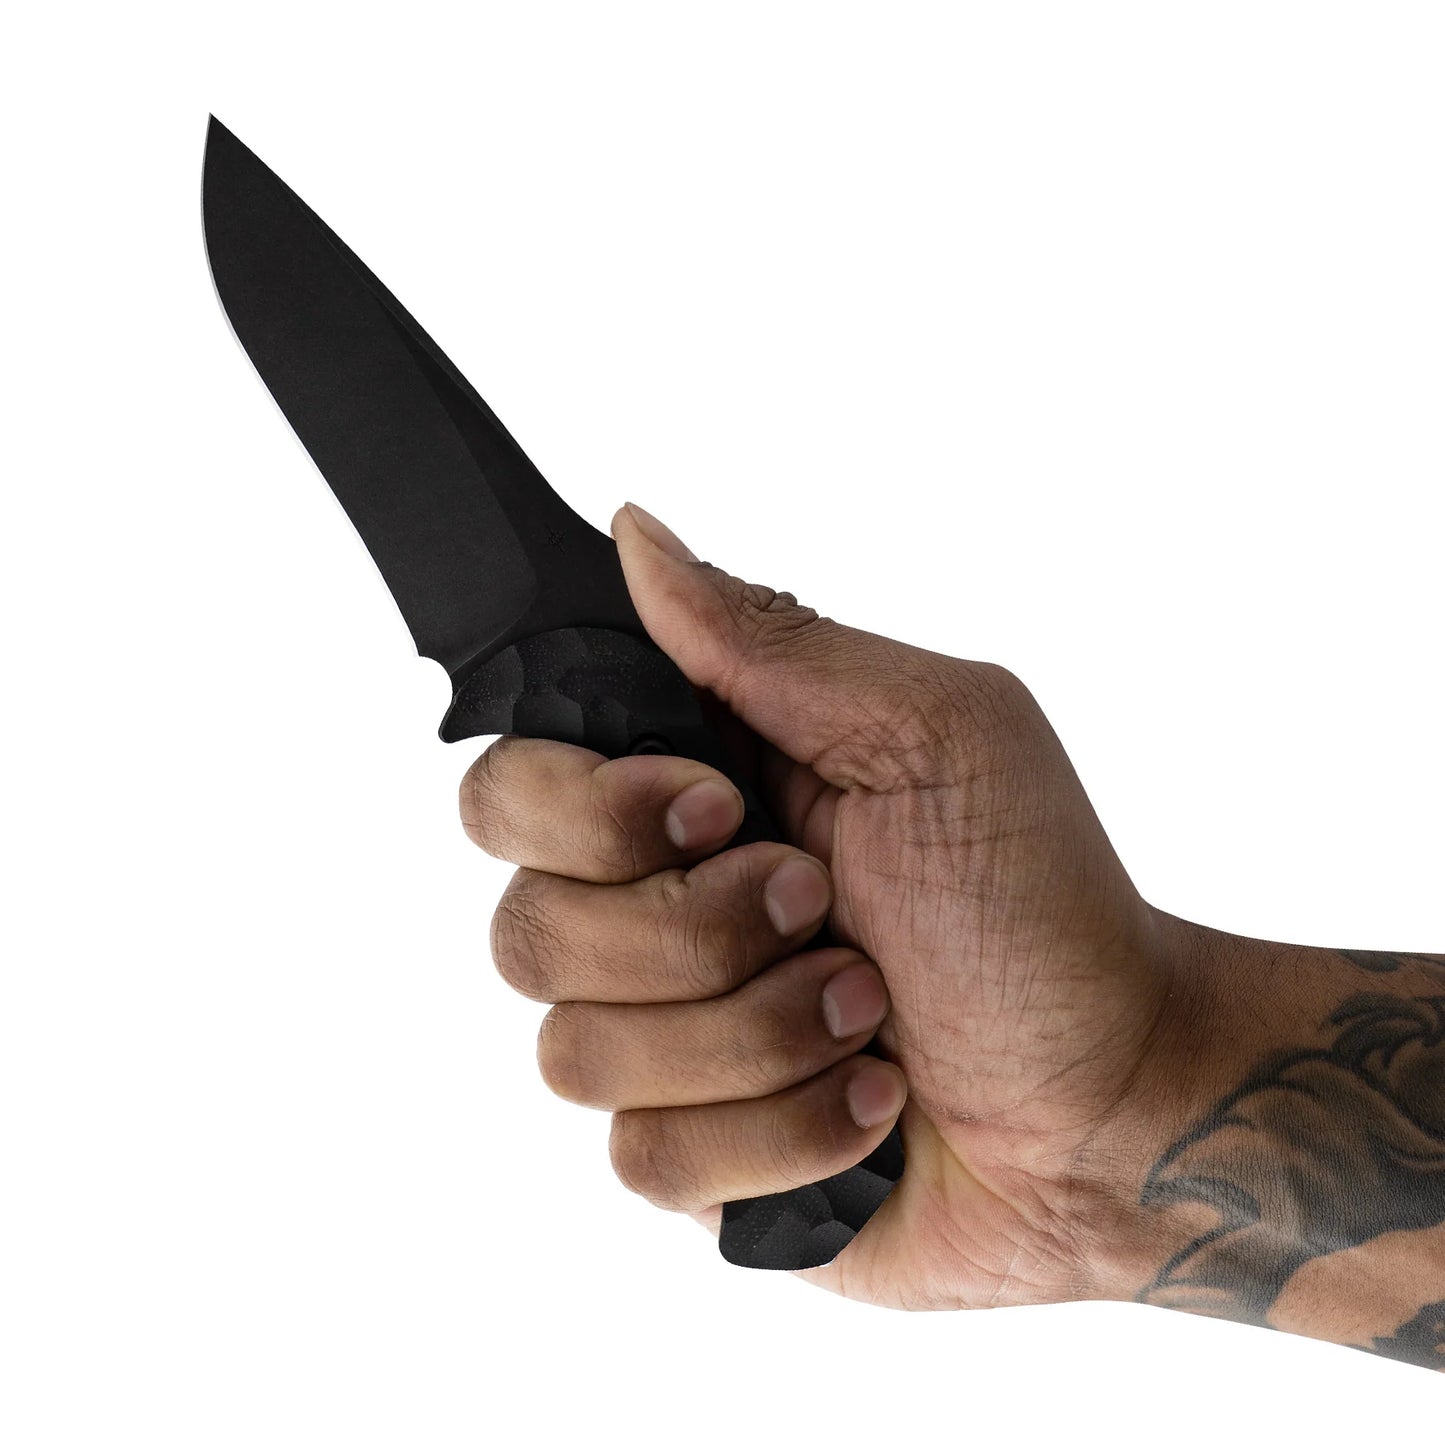 Couteau à lame fixe Mullet - Toor Knives-T.A DEFENSE